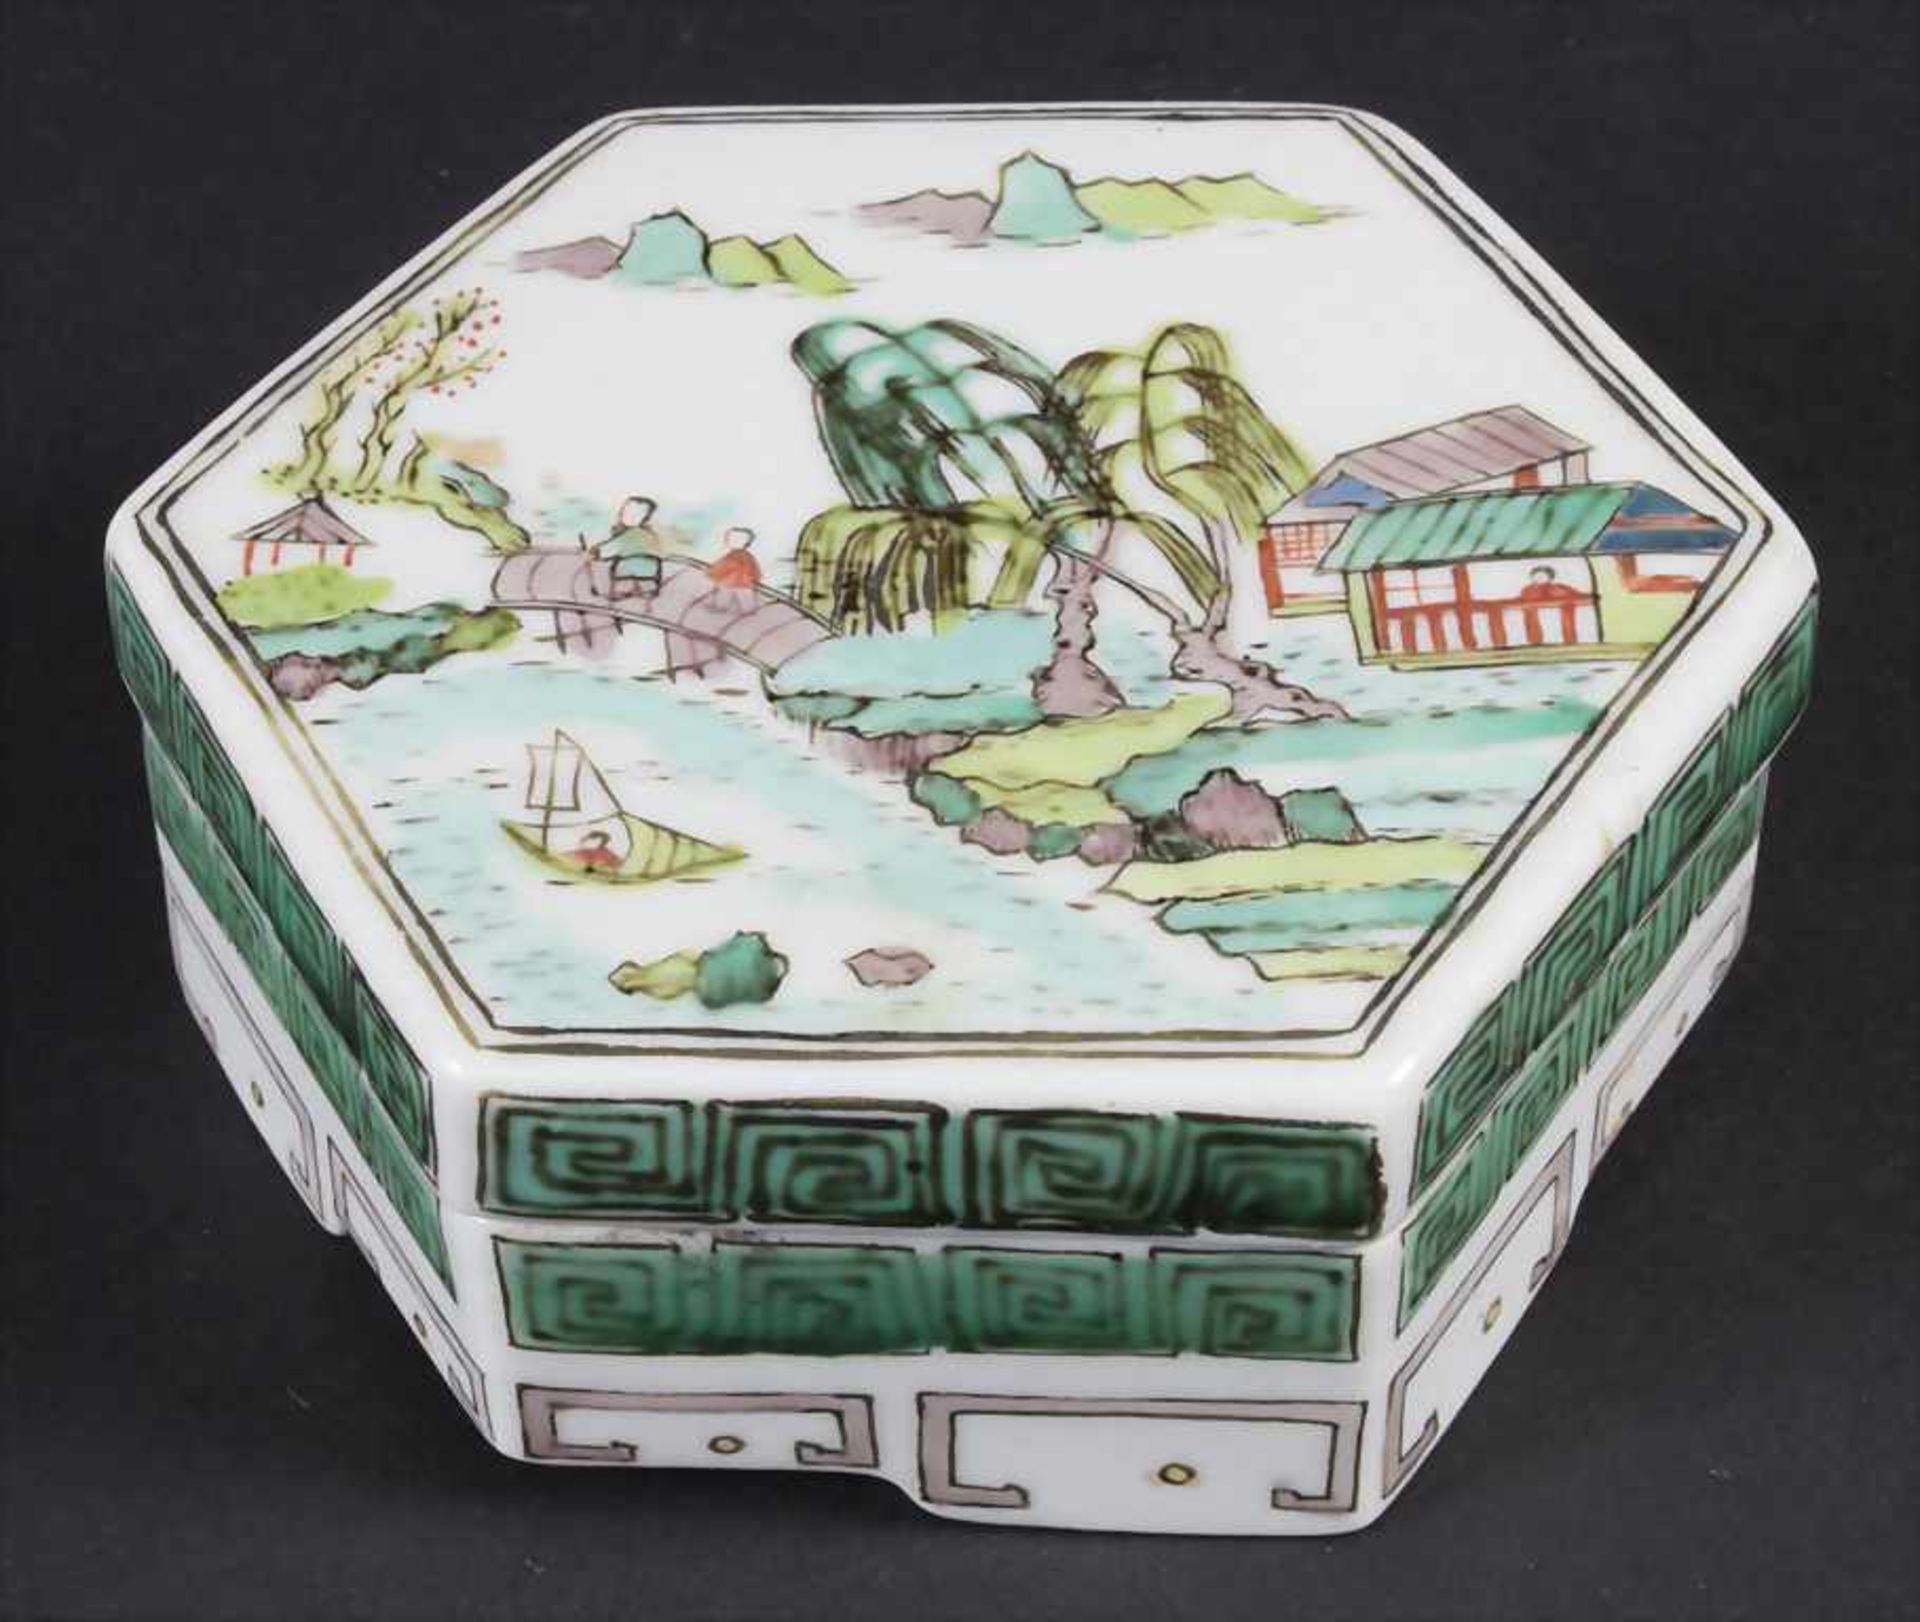 Porzellan-Deckeldose / A porcelain lidded box, China, Qing-Dynastie, wohl 18. Jh.